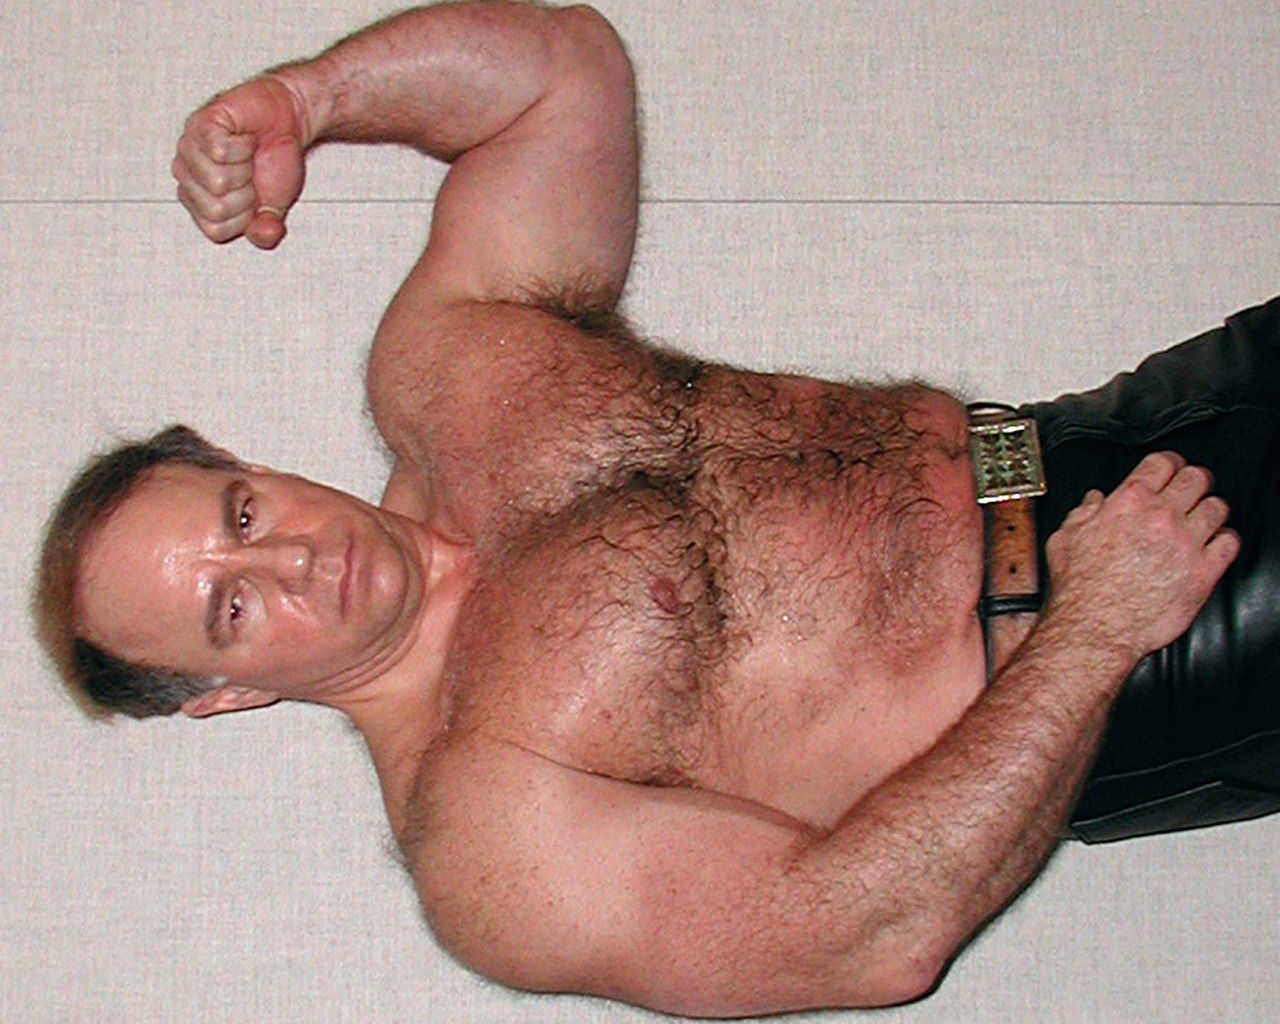 Photo by Hairy Musclebears with the username @hairymusclebears,  August 19, 2019 at 12:29 PM and the text says 'Hairy Strong Wrestler Man from GLOBALFIGHT.com personals #gay #chubbygay #chubbybear #bearchubby #stockybears #thebearmag #instabears #instabear #ursos #gaygram #bearwww #chunkyguys #GayBear #beargay #gayireland #bearstyle #Hairybear #picsbybears..'